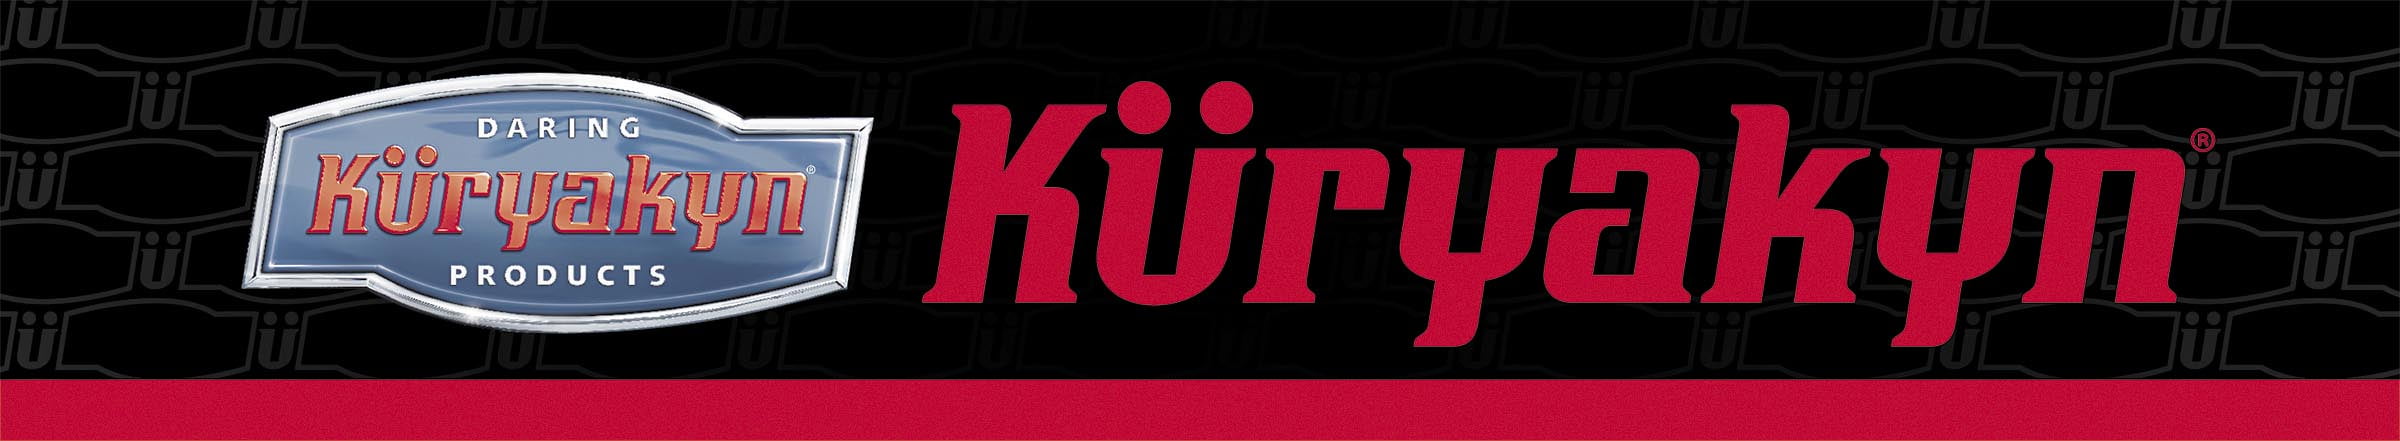 Kuryakyn Brand Graphics For 48" X 8" Channel Card Holder 505231